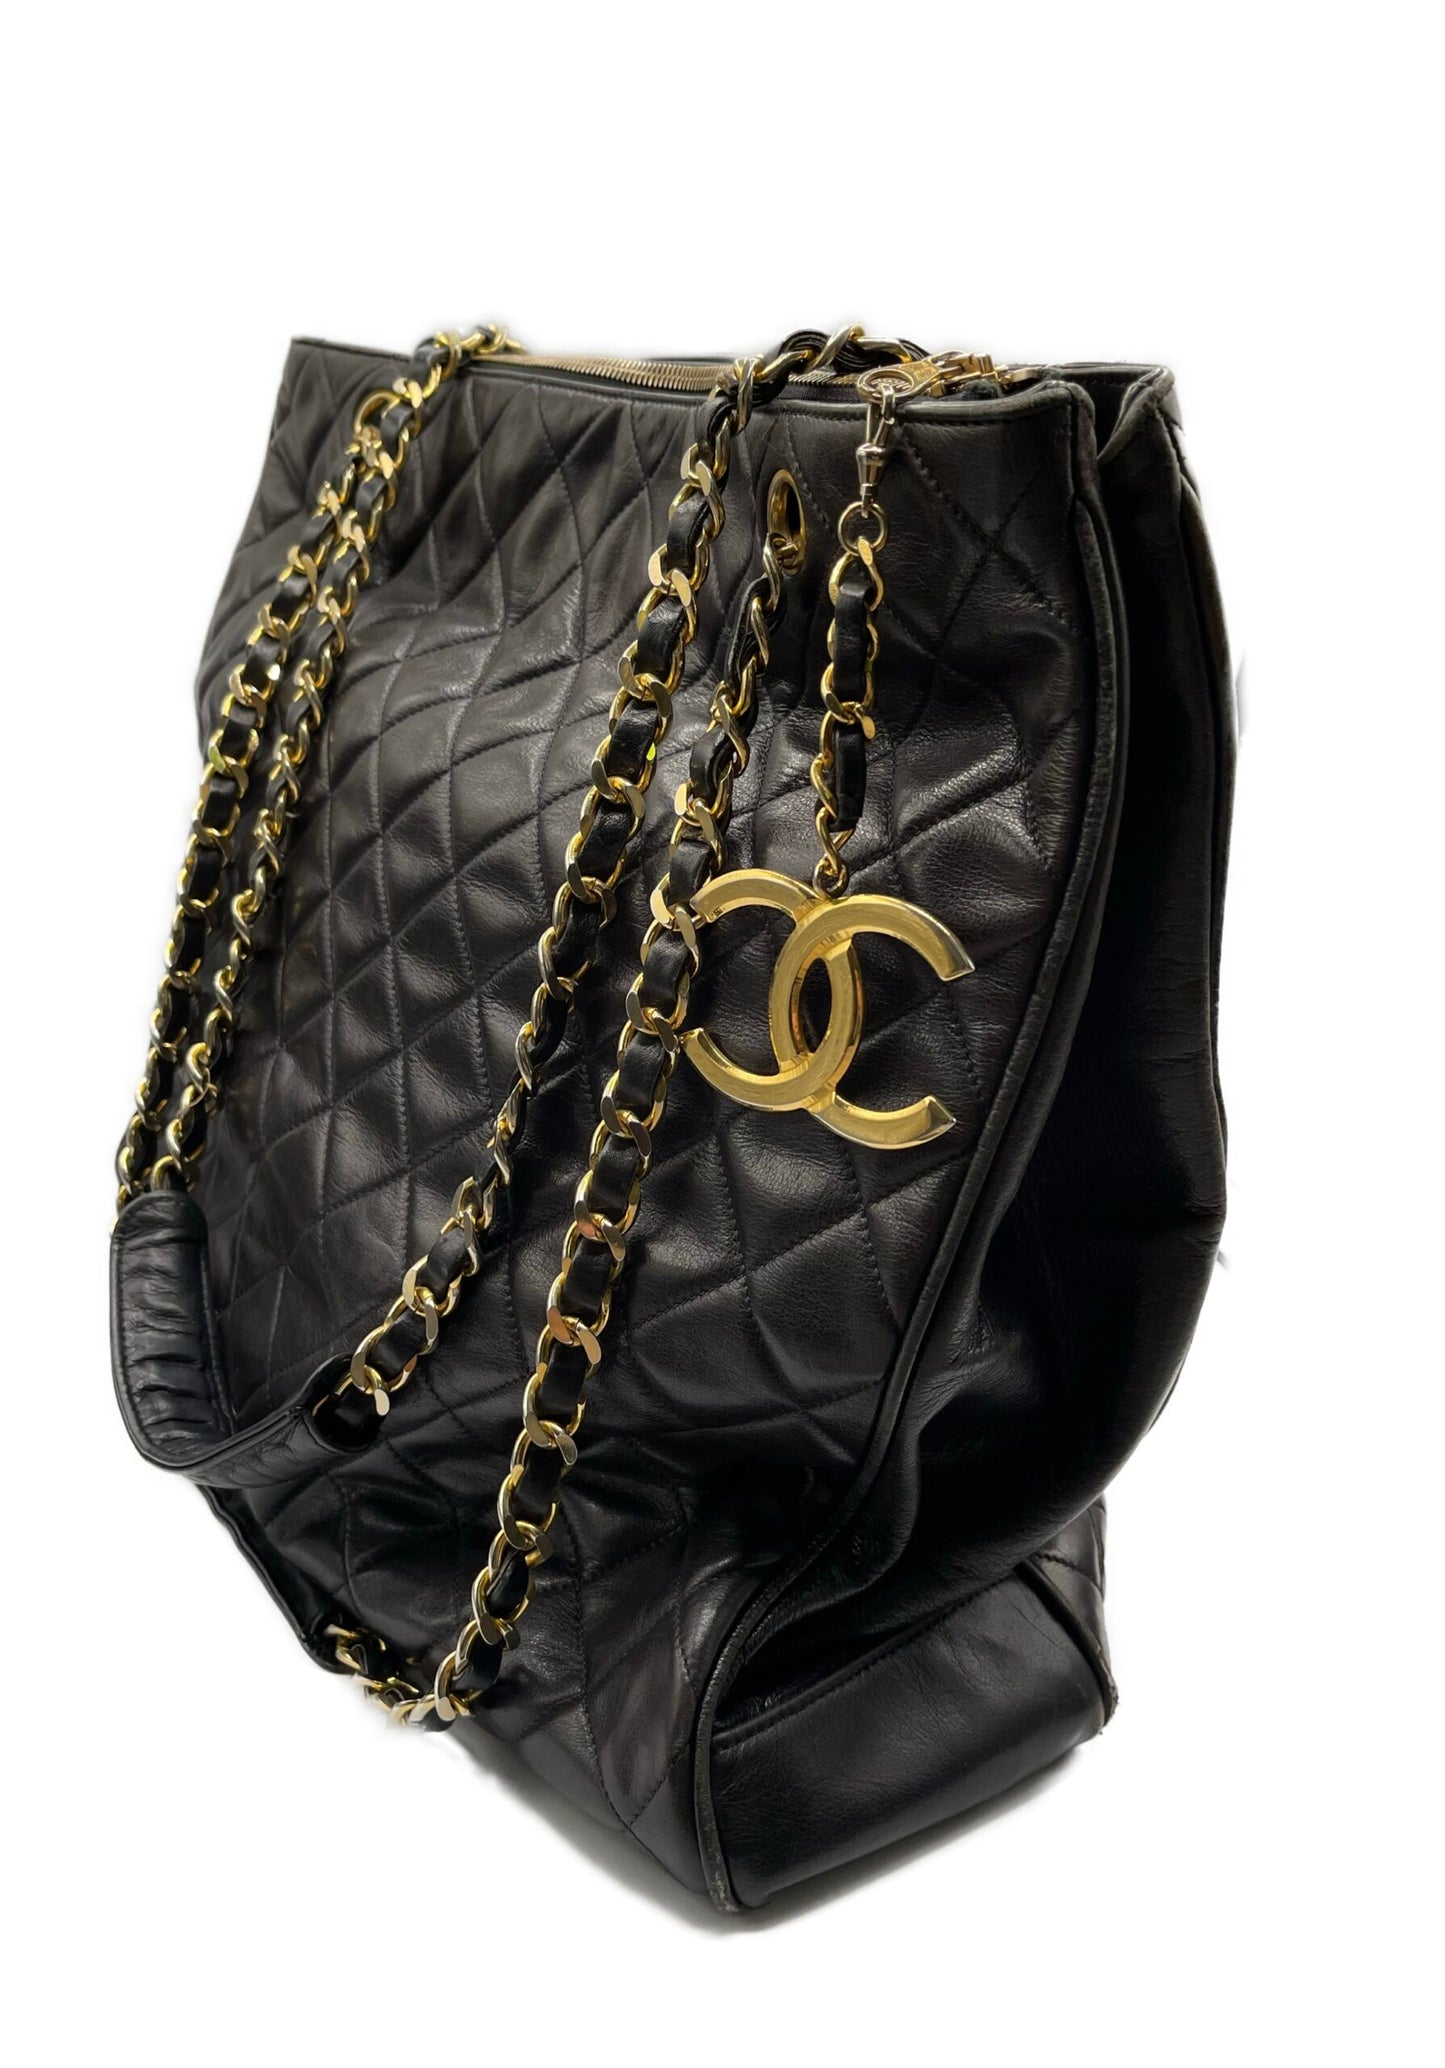 Chanel tote shopper nera pelle usata ottima